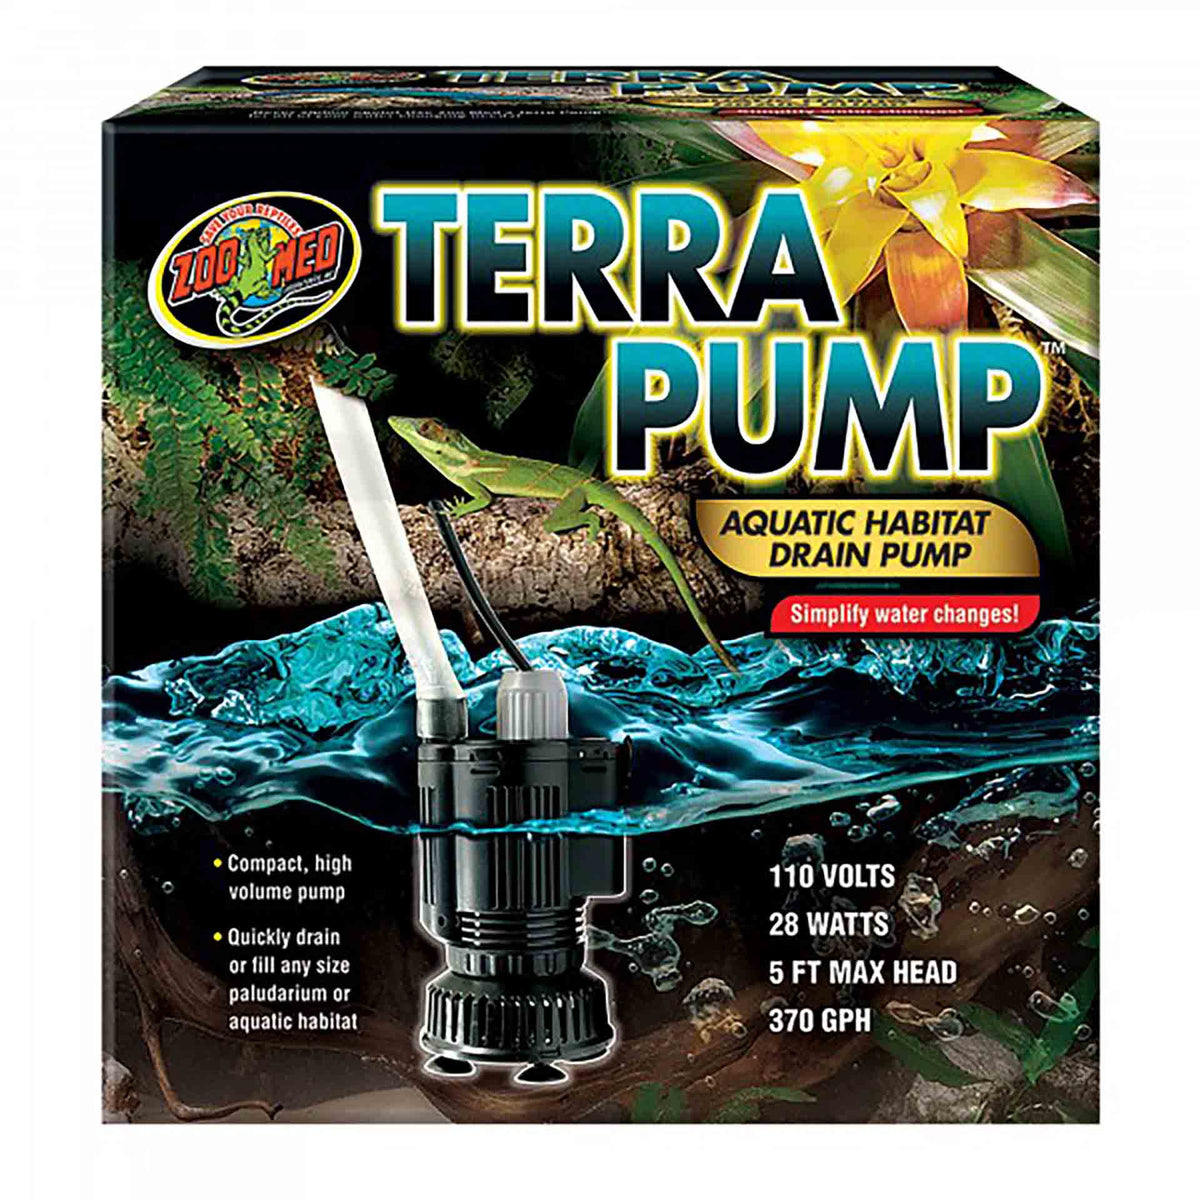 Zoo Med Terra Pump - Aquatic Habitat Drain Pump